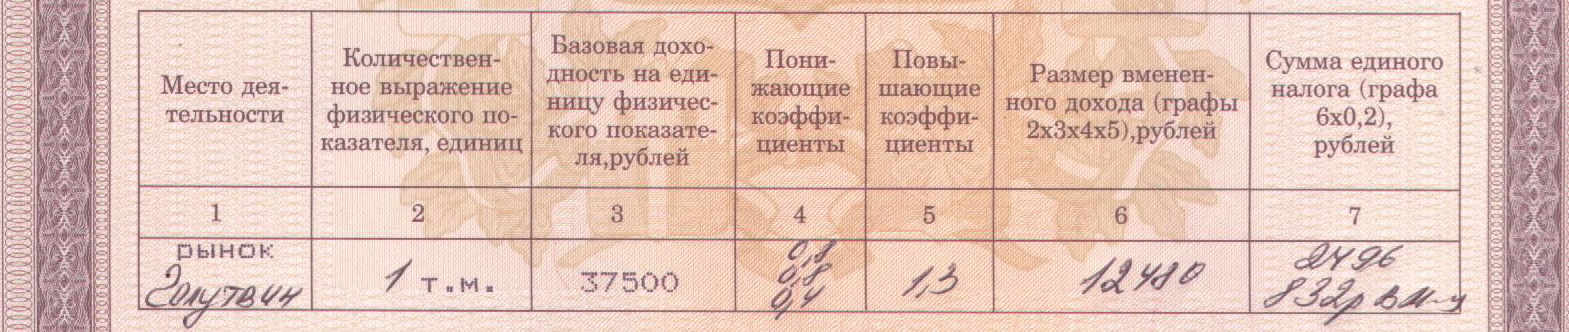 Налог 832 рубля